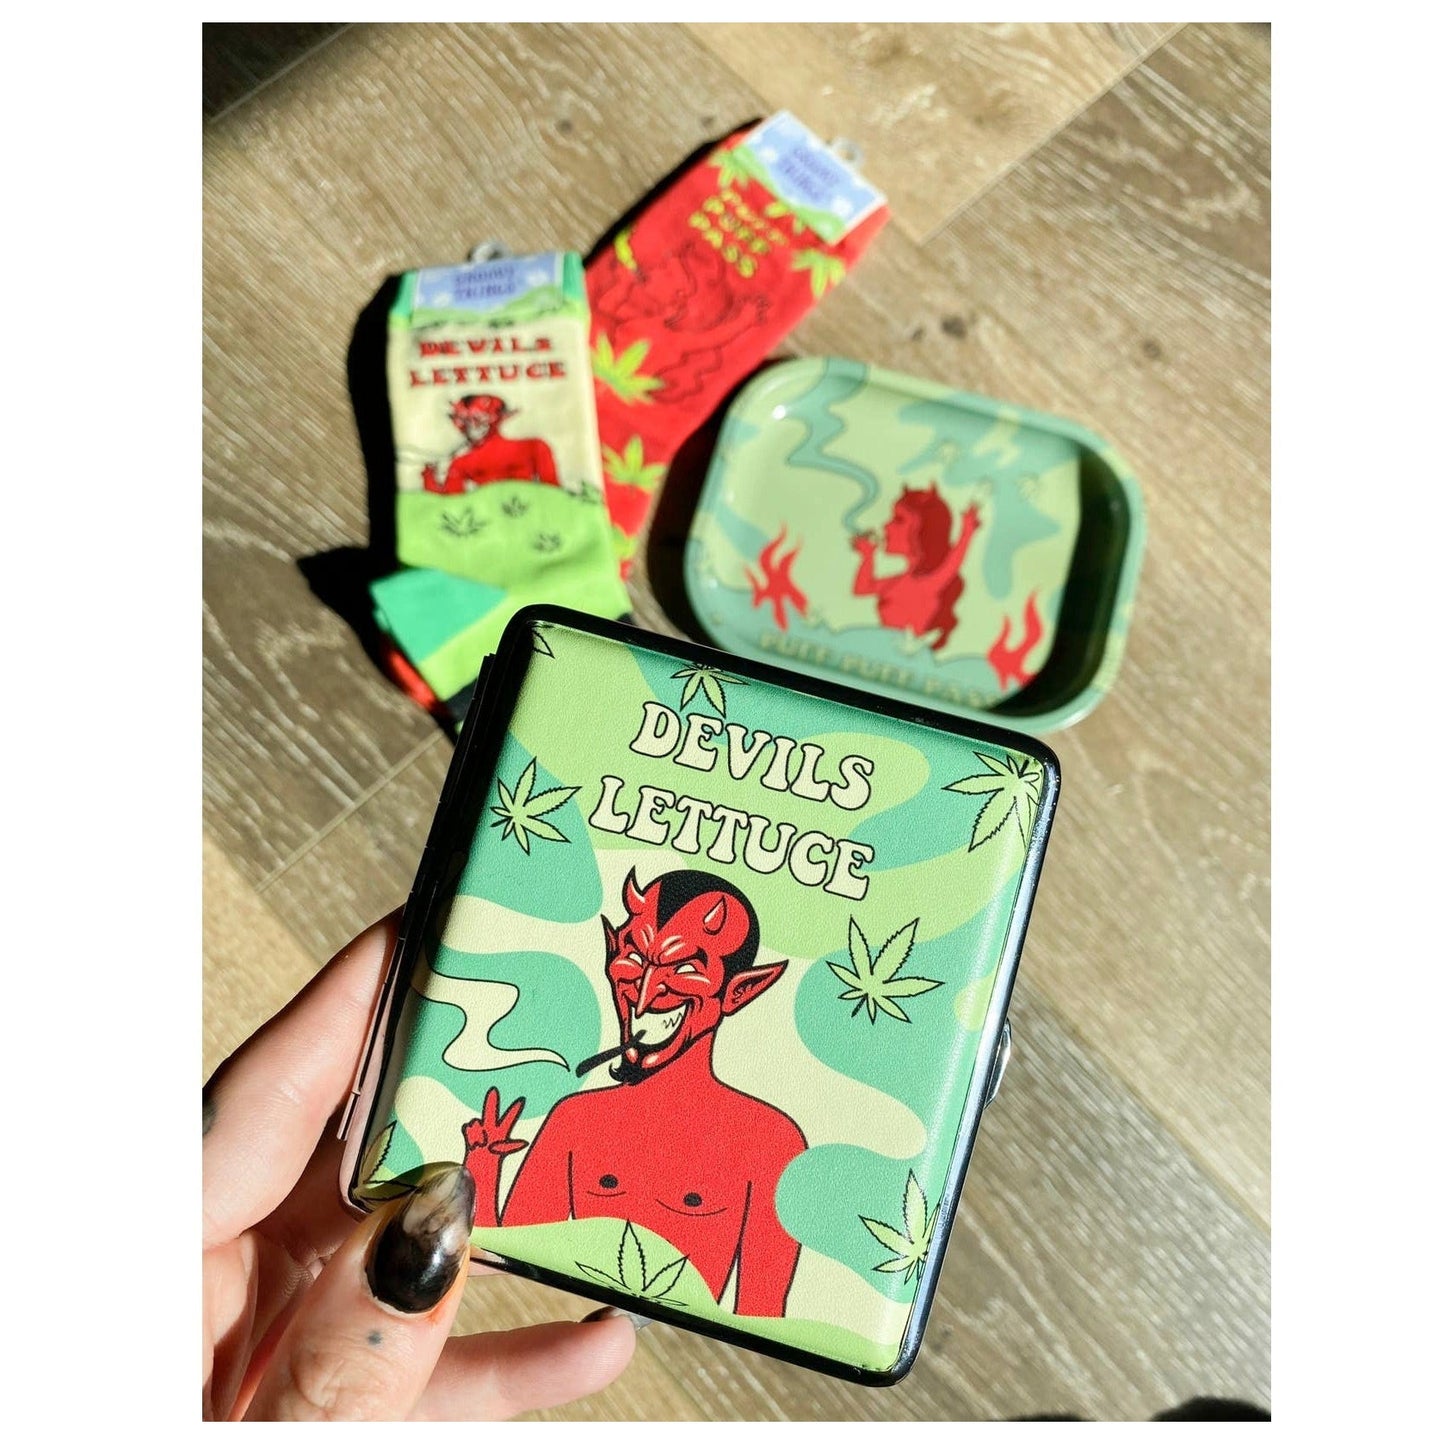 Devil's Lettuce Blunt Case | Illustrated Smoking Supplies Holder 4" x 4"